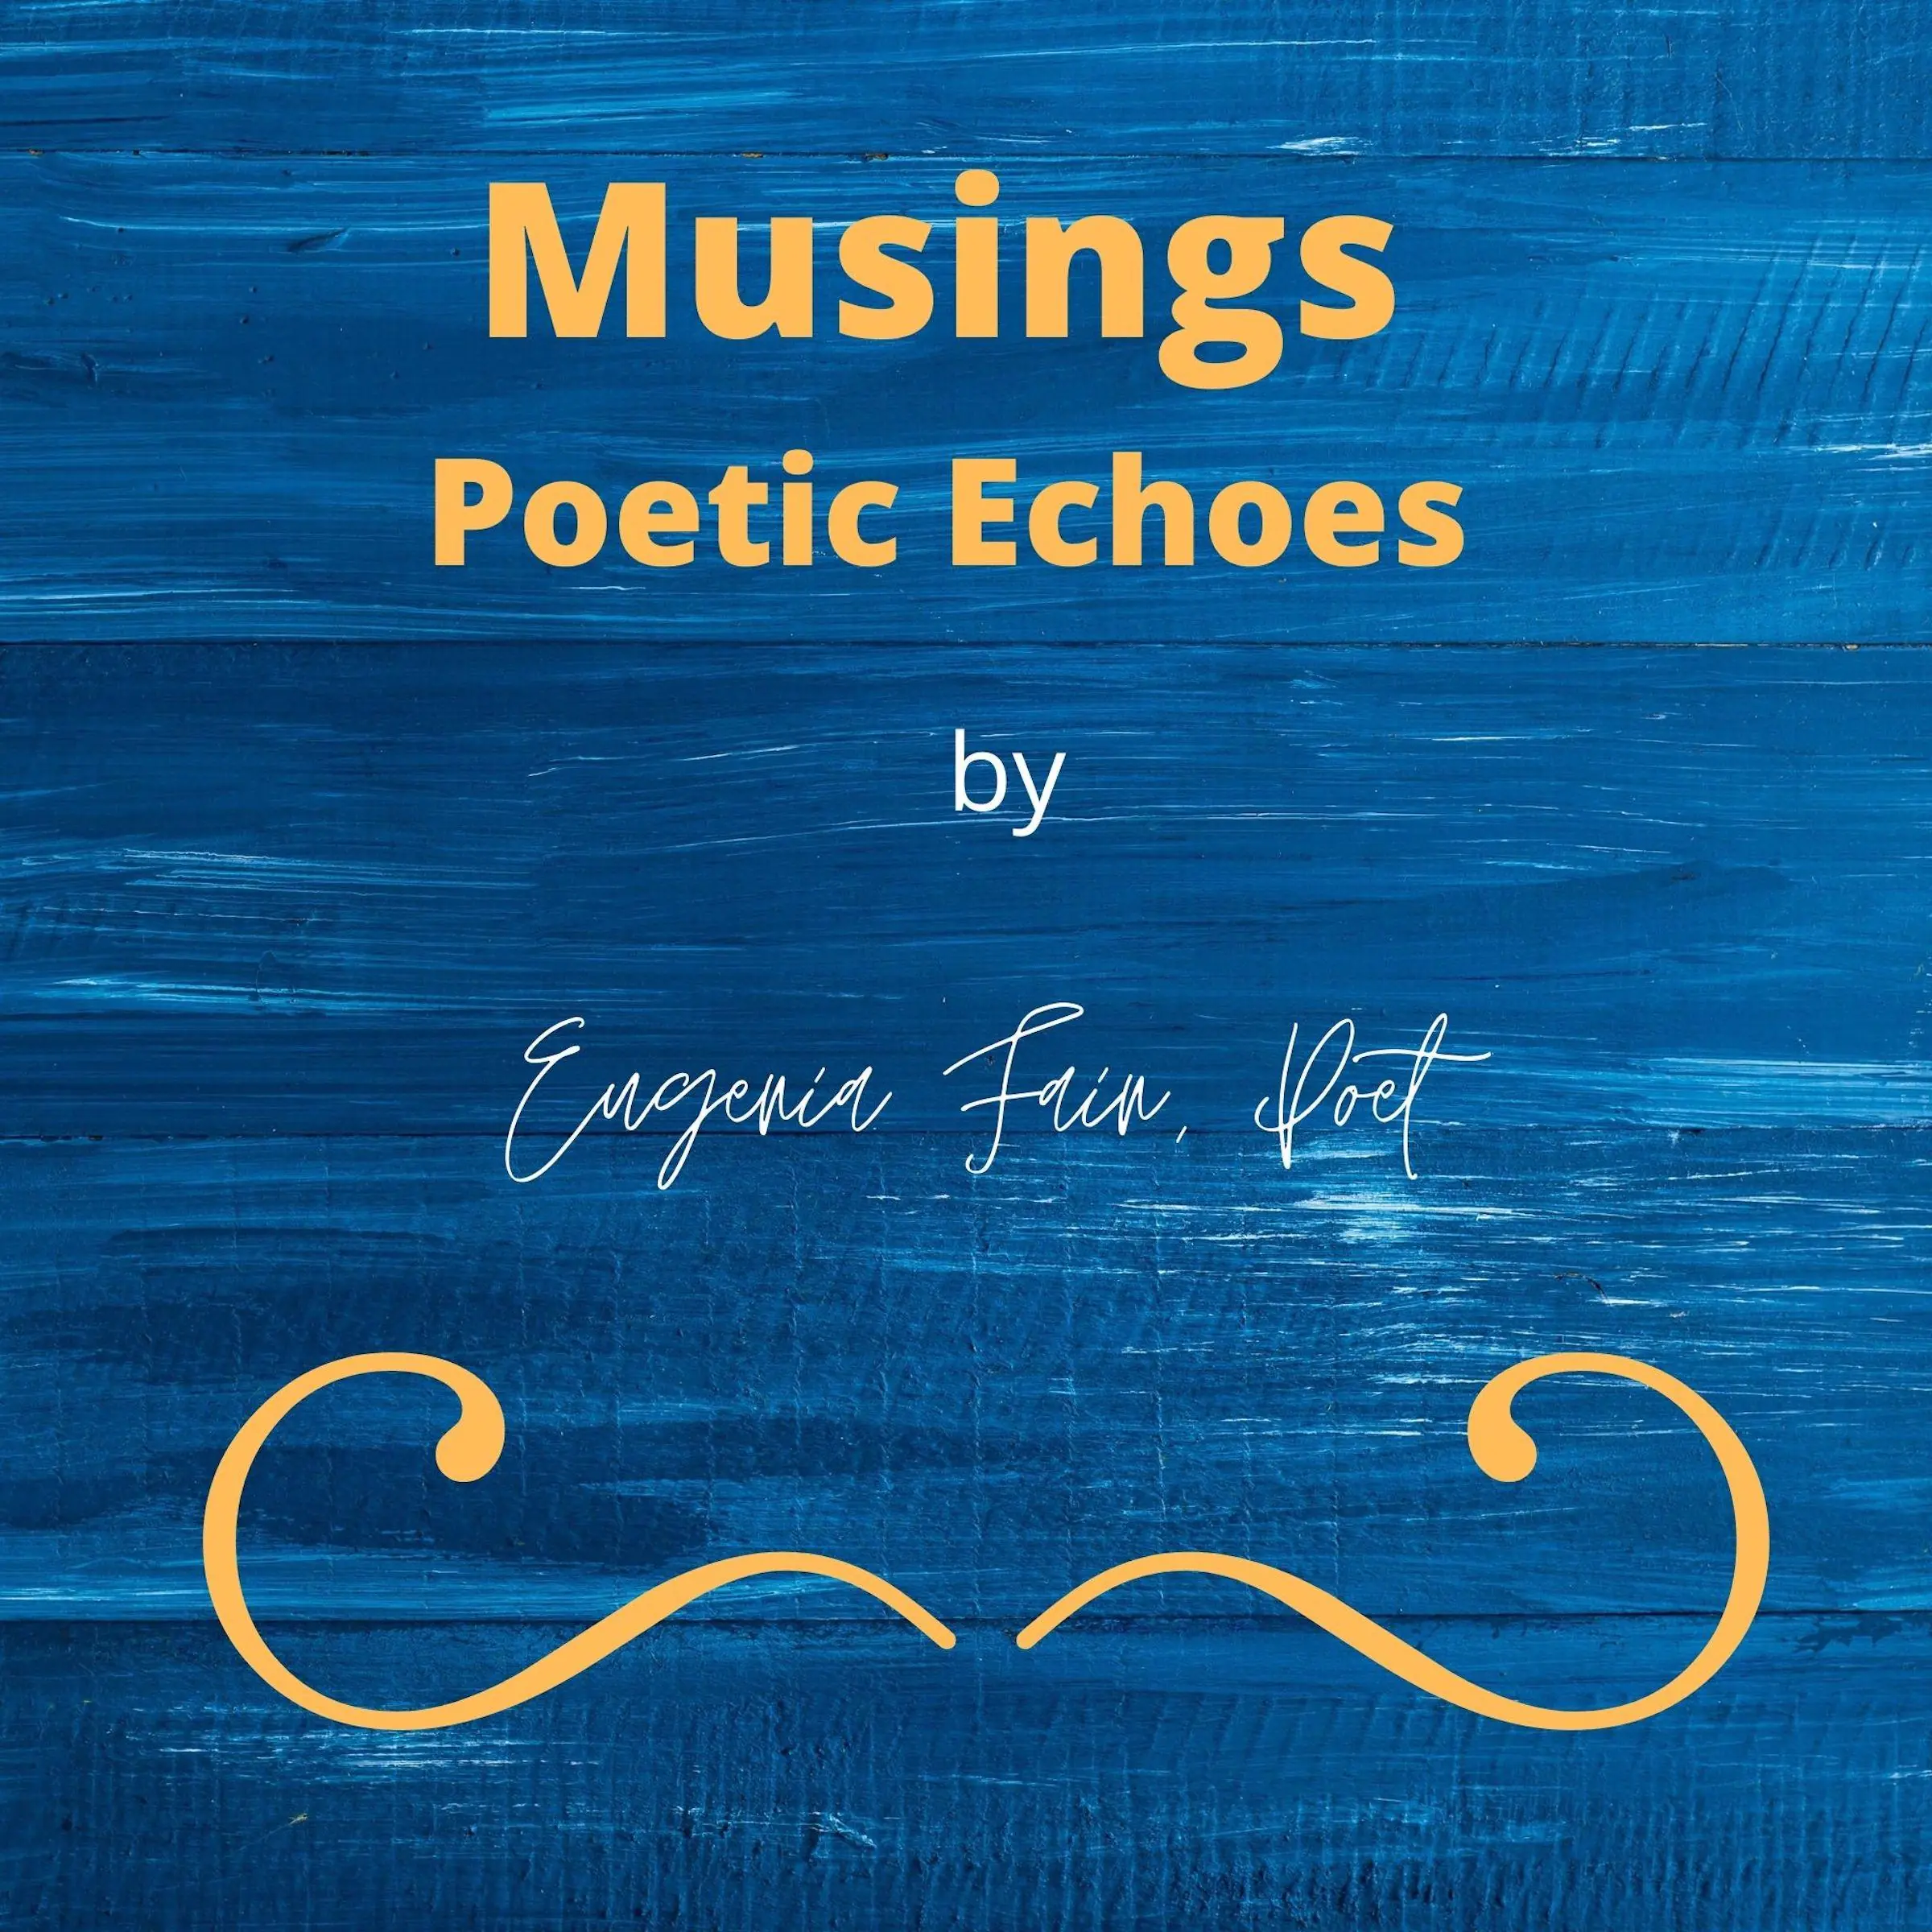 Musings Poetic Echoes Audiobook by Eugenia Fain